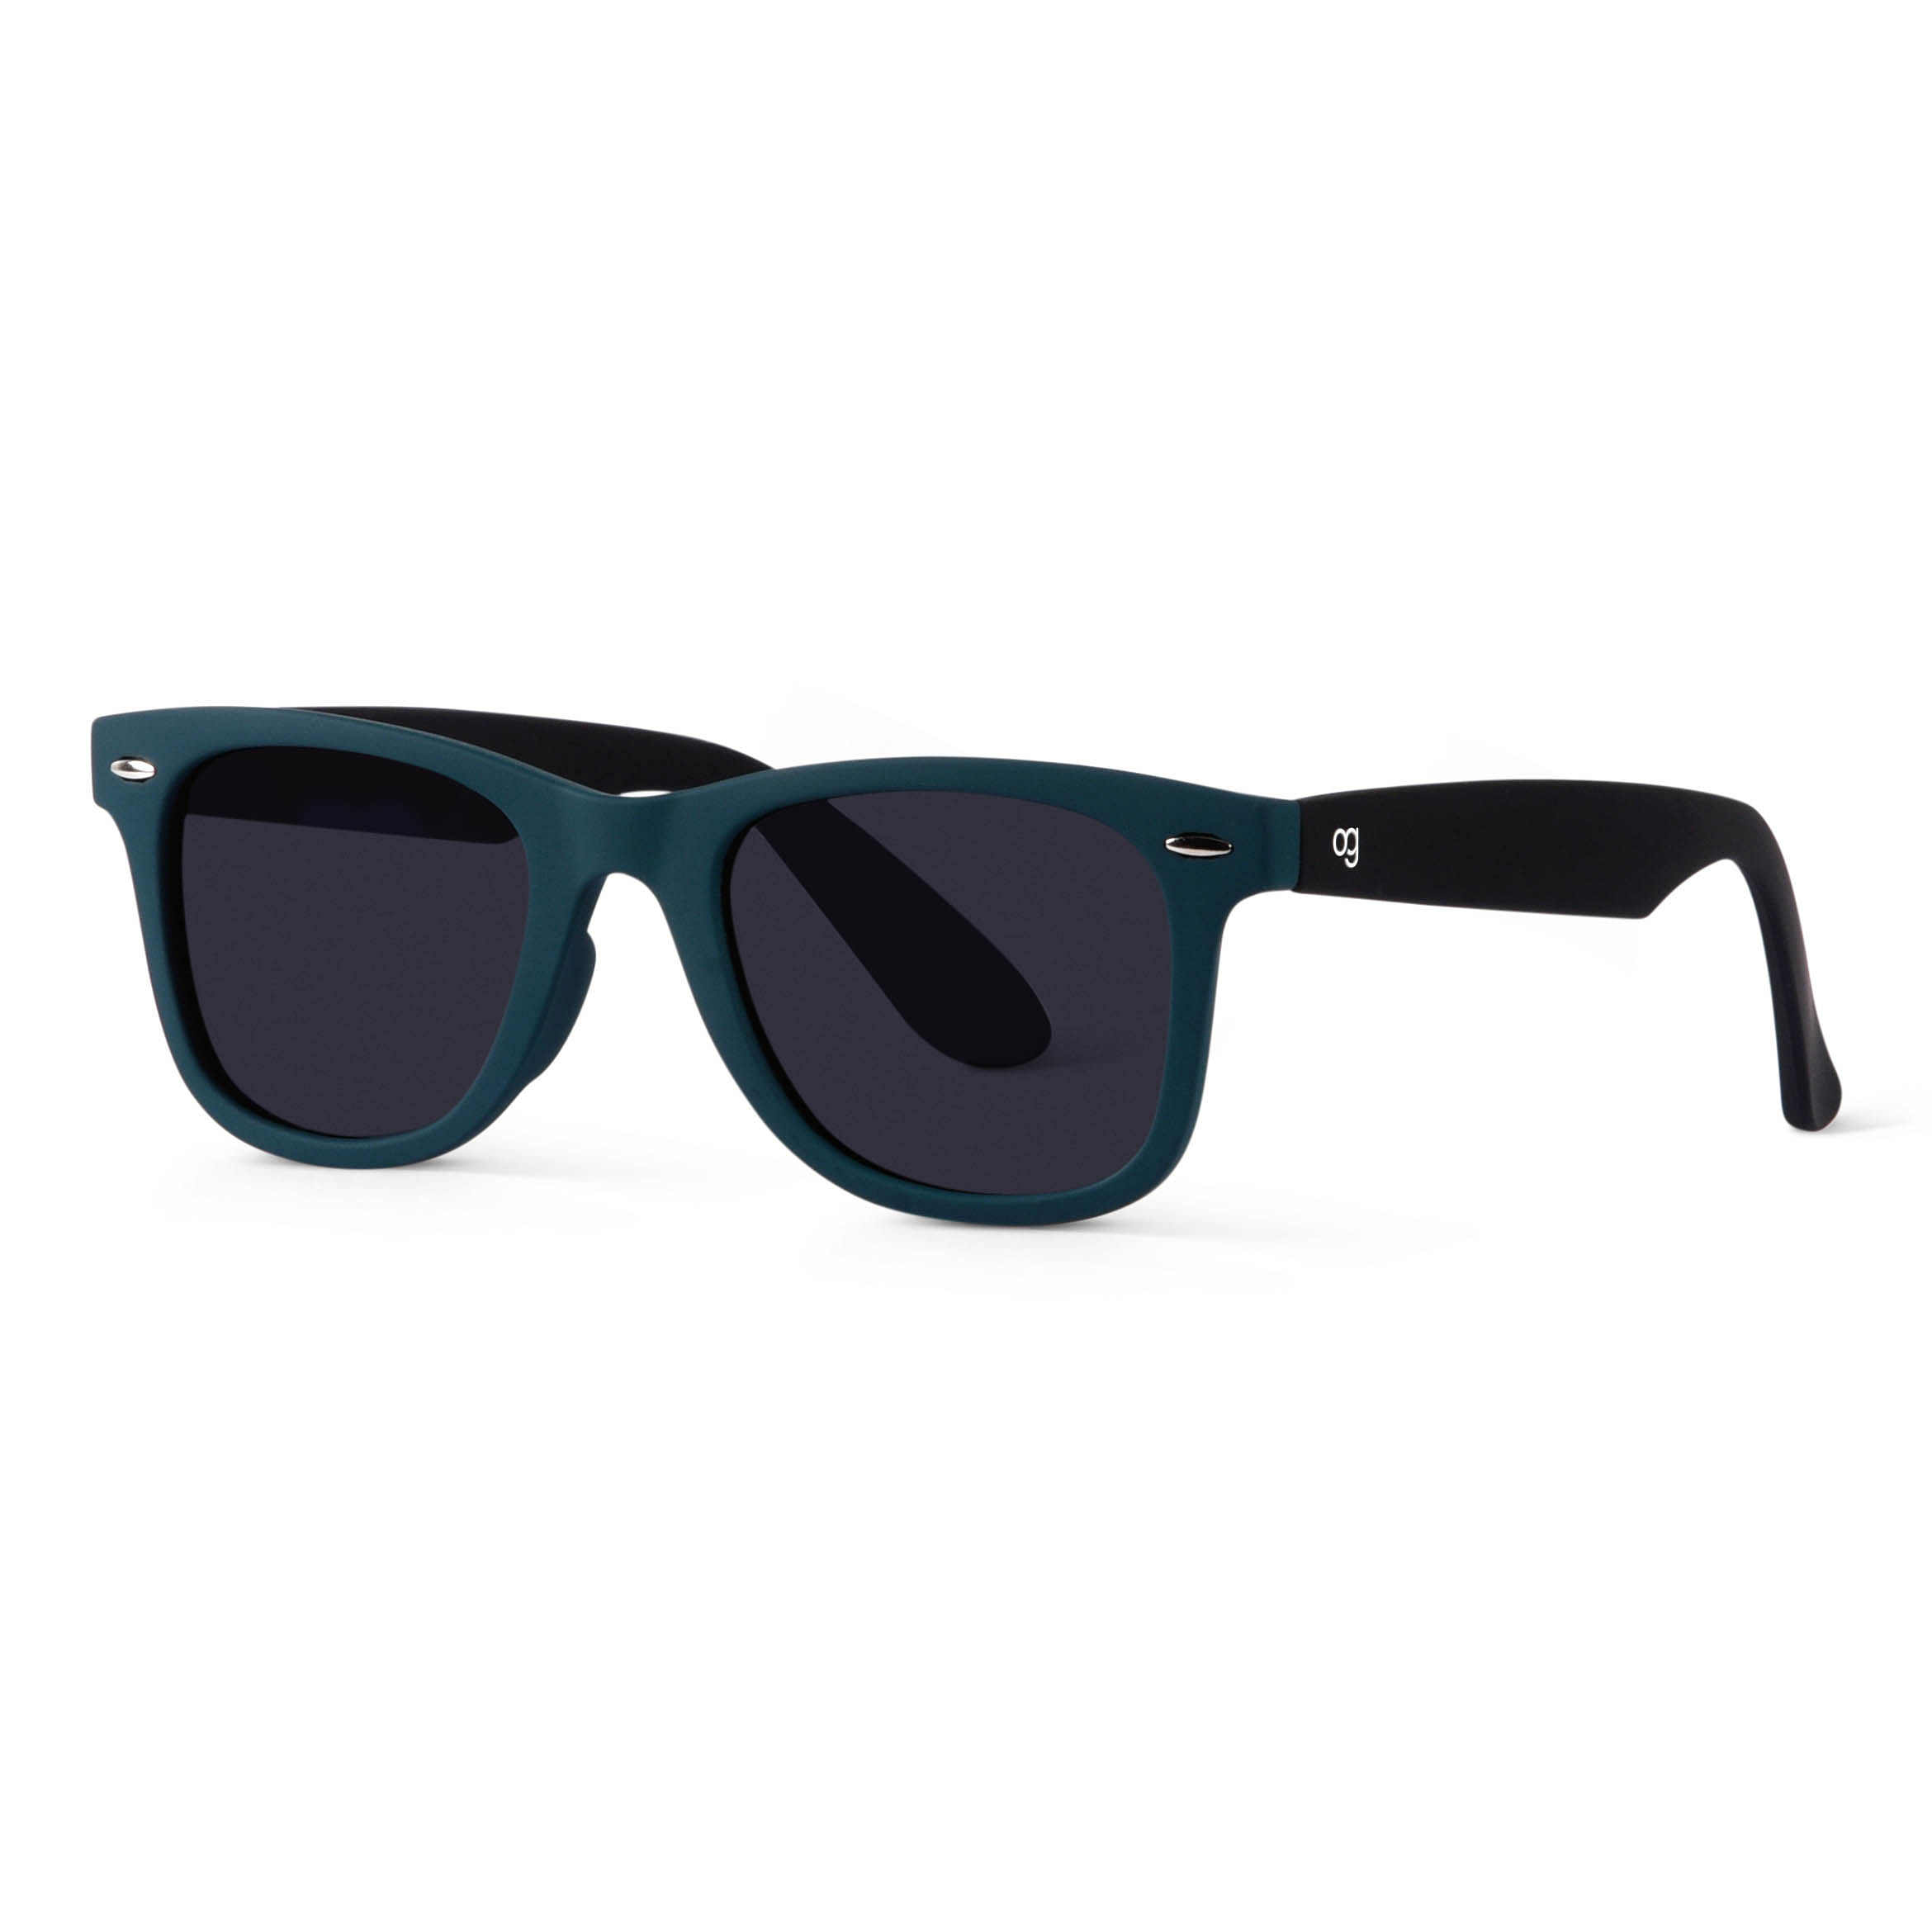 Ray-Ban New Wayfarer Classic Black Large Polarized Men's Sunglasses RB2132  901/58 58-18